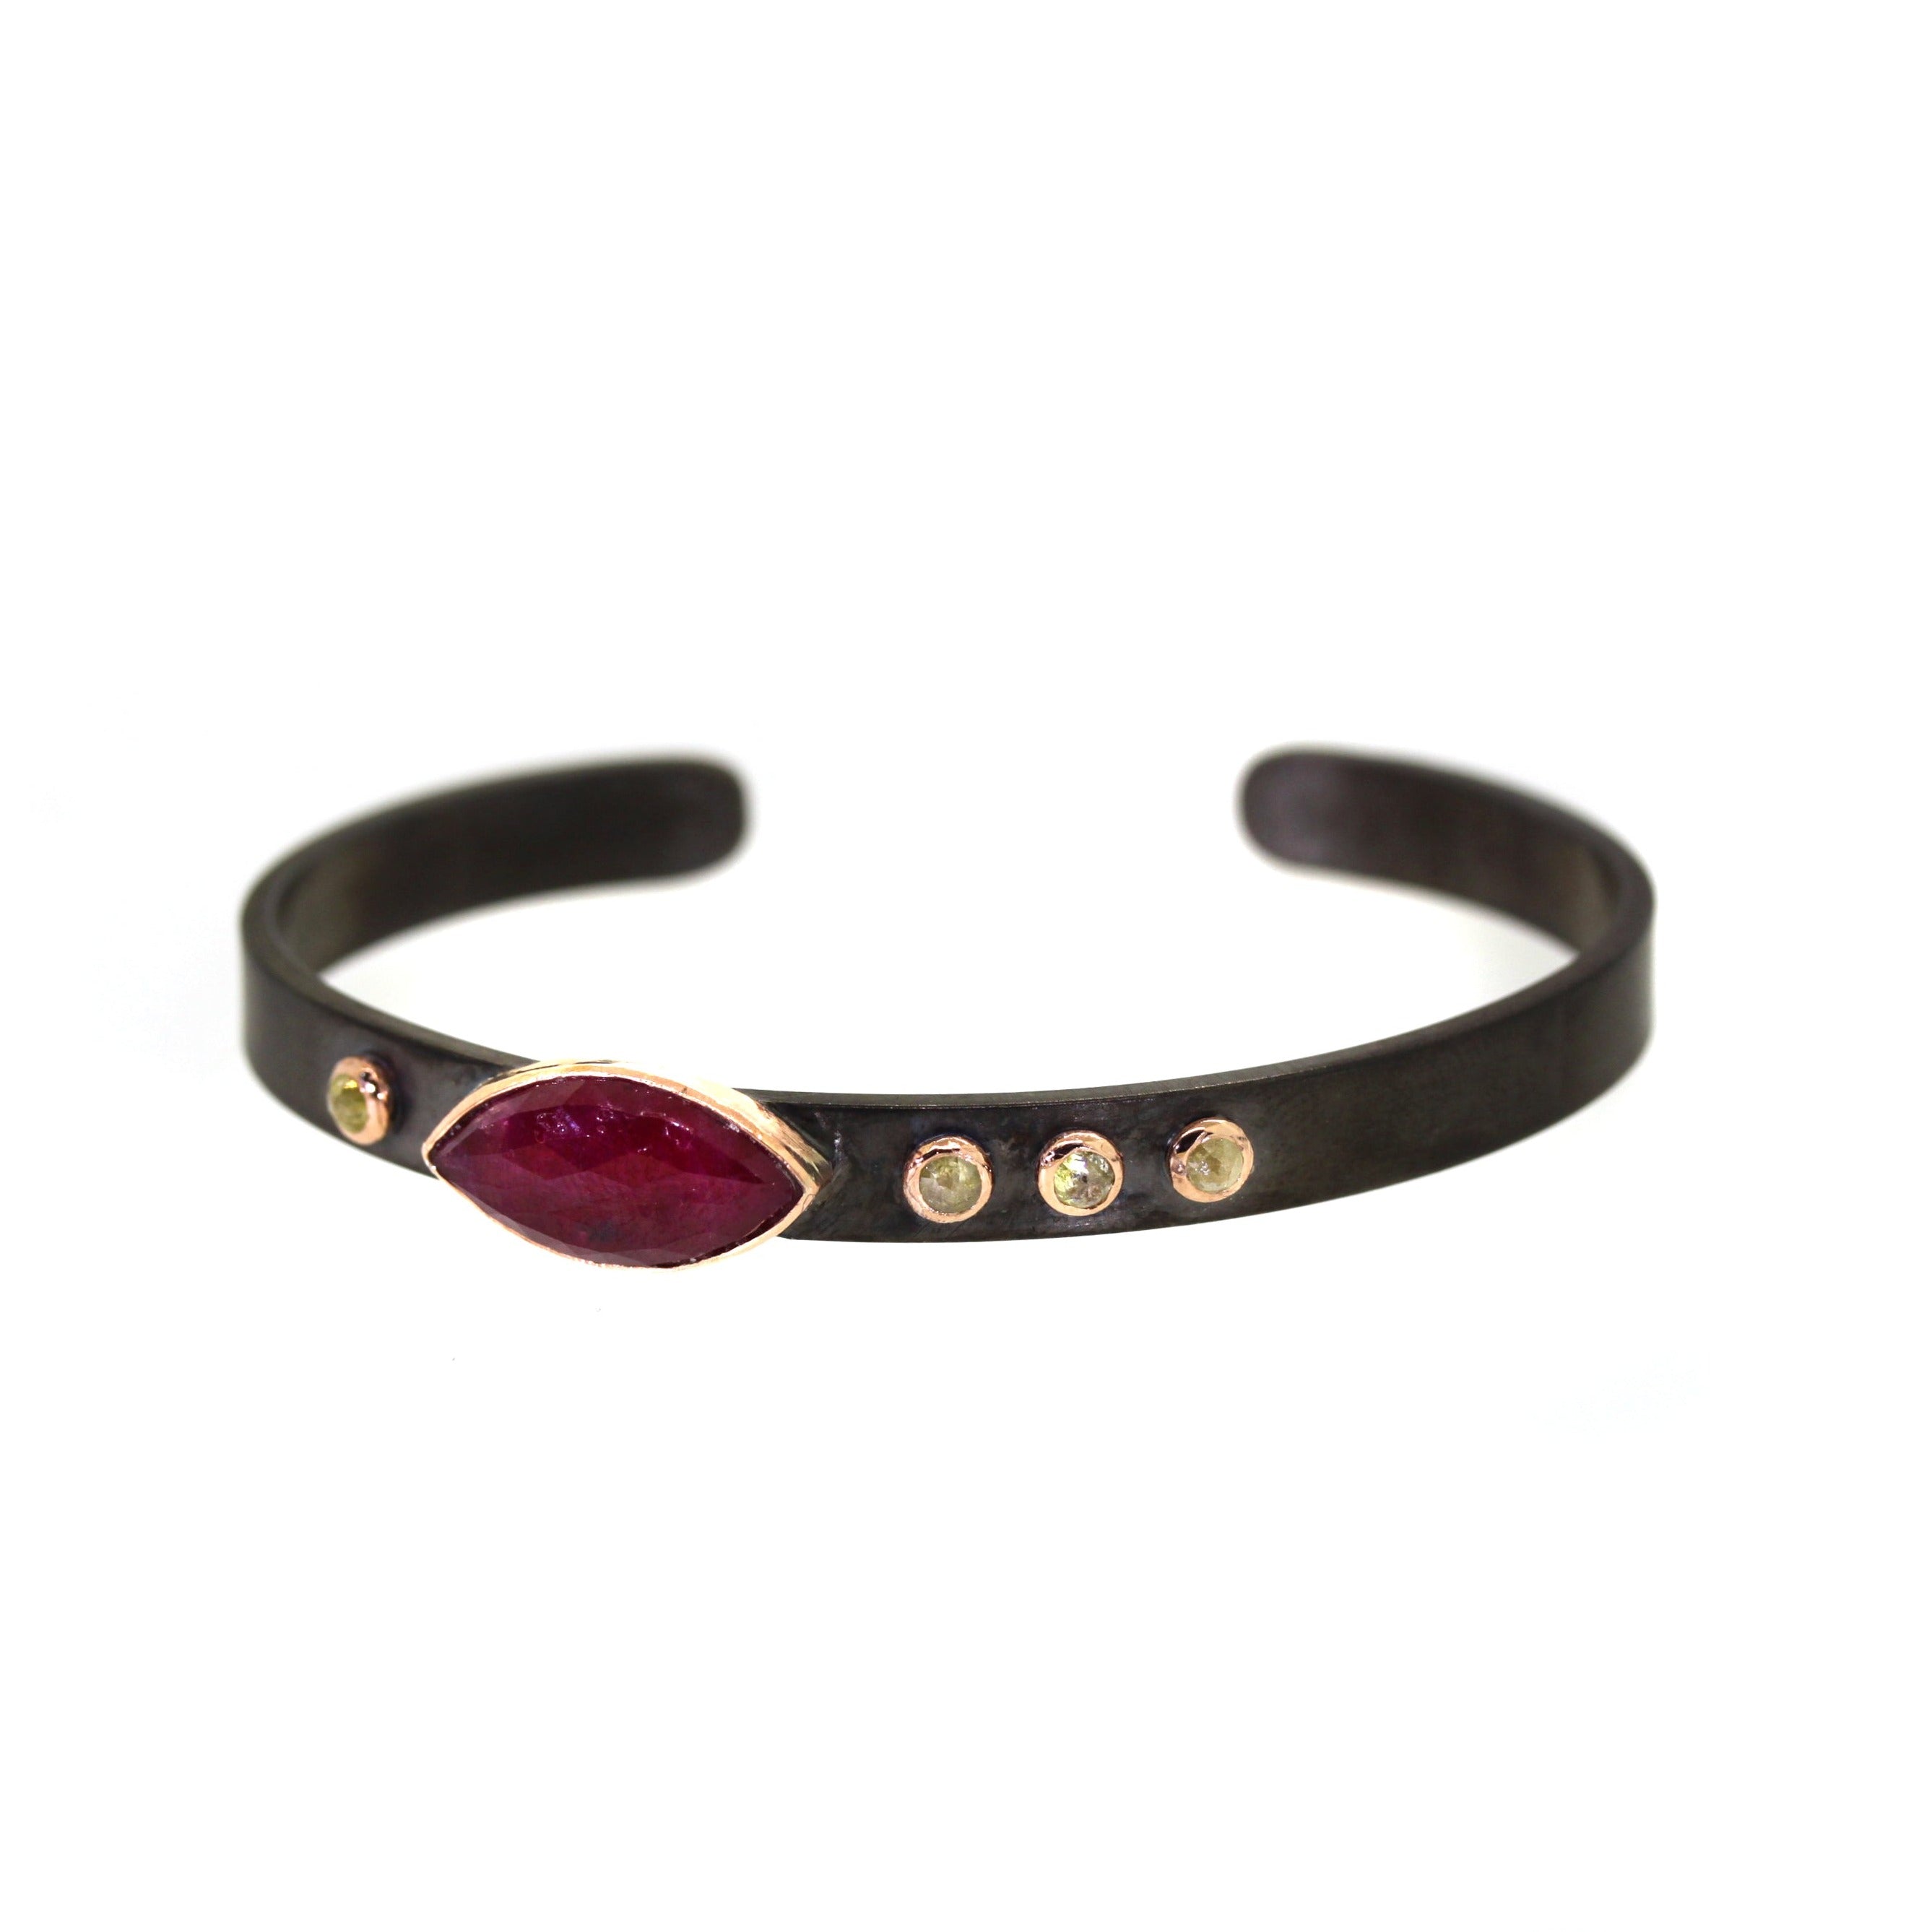 Marquise Shaped Ruby & Diamond Cuff Bracelet